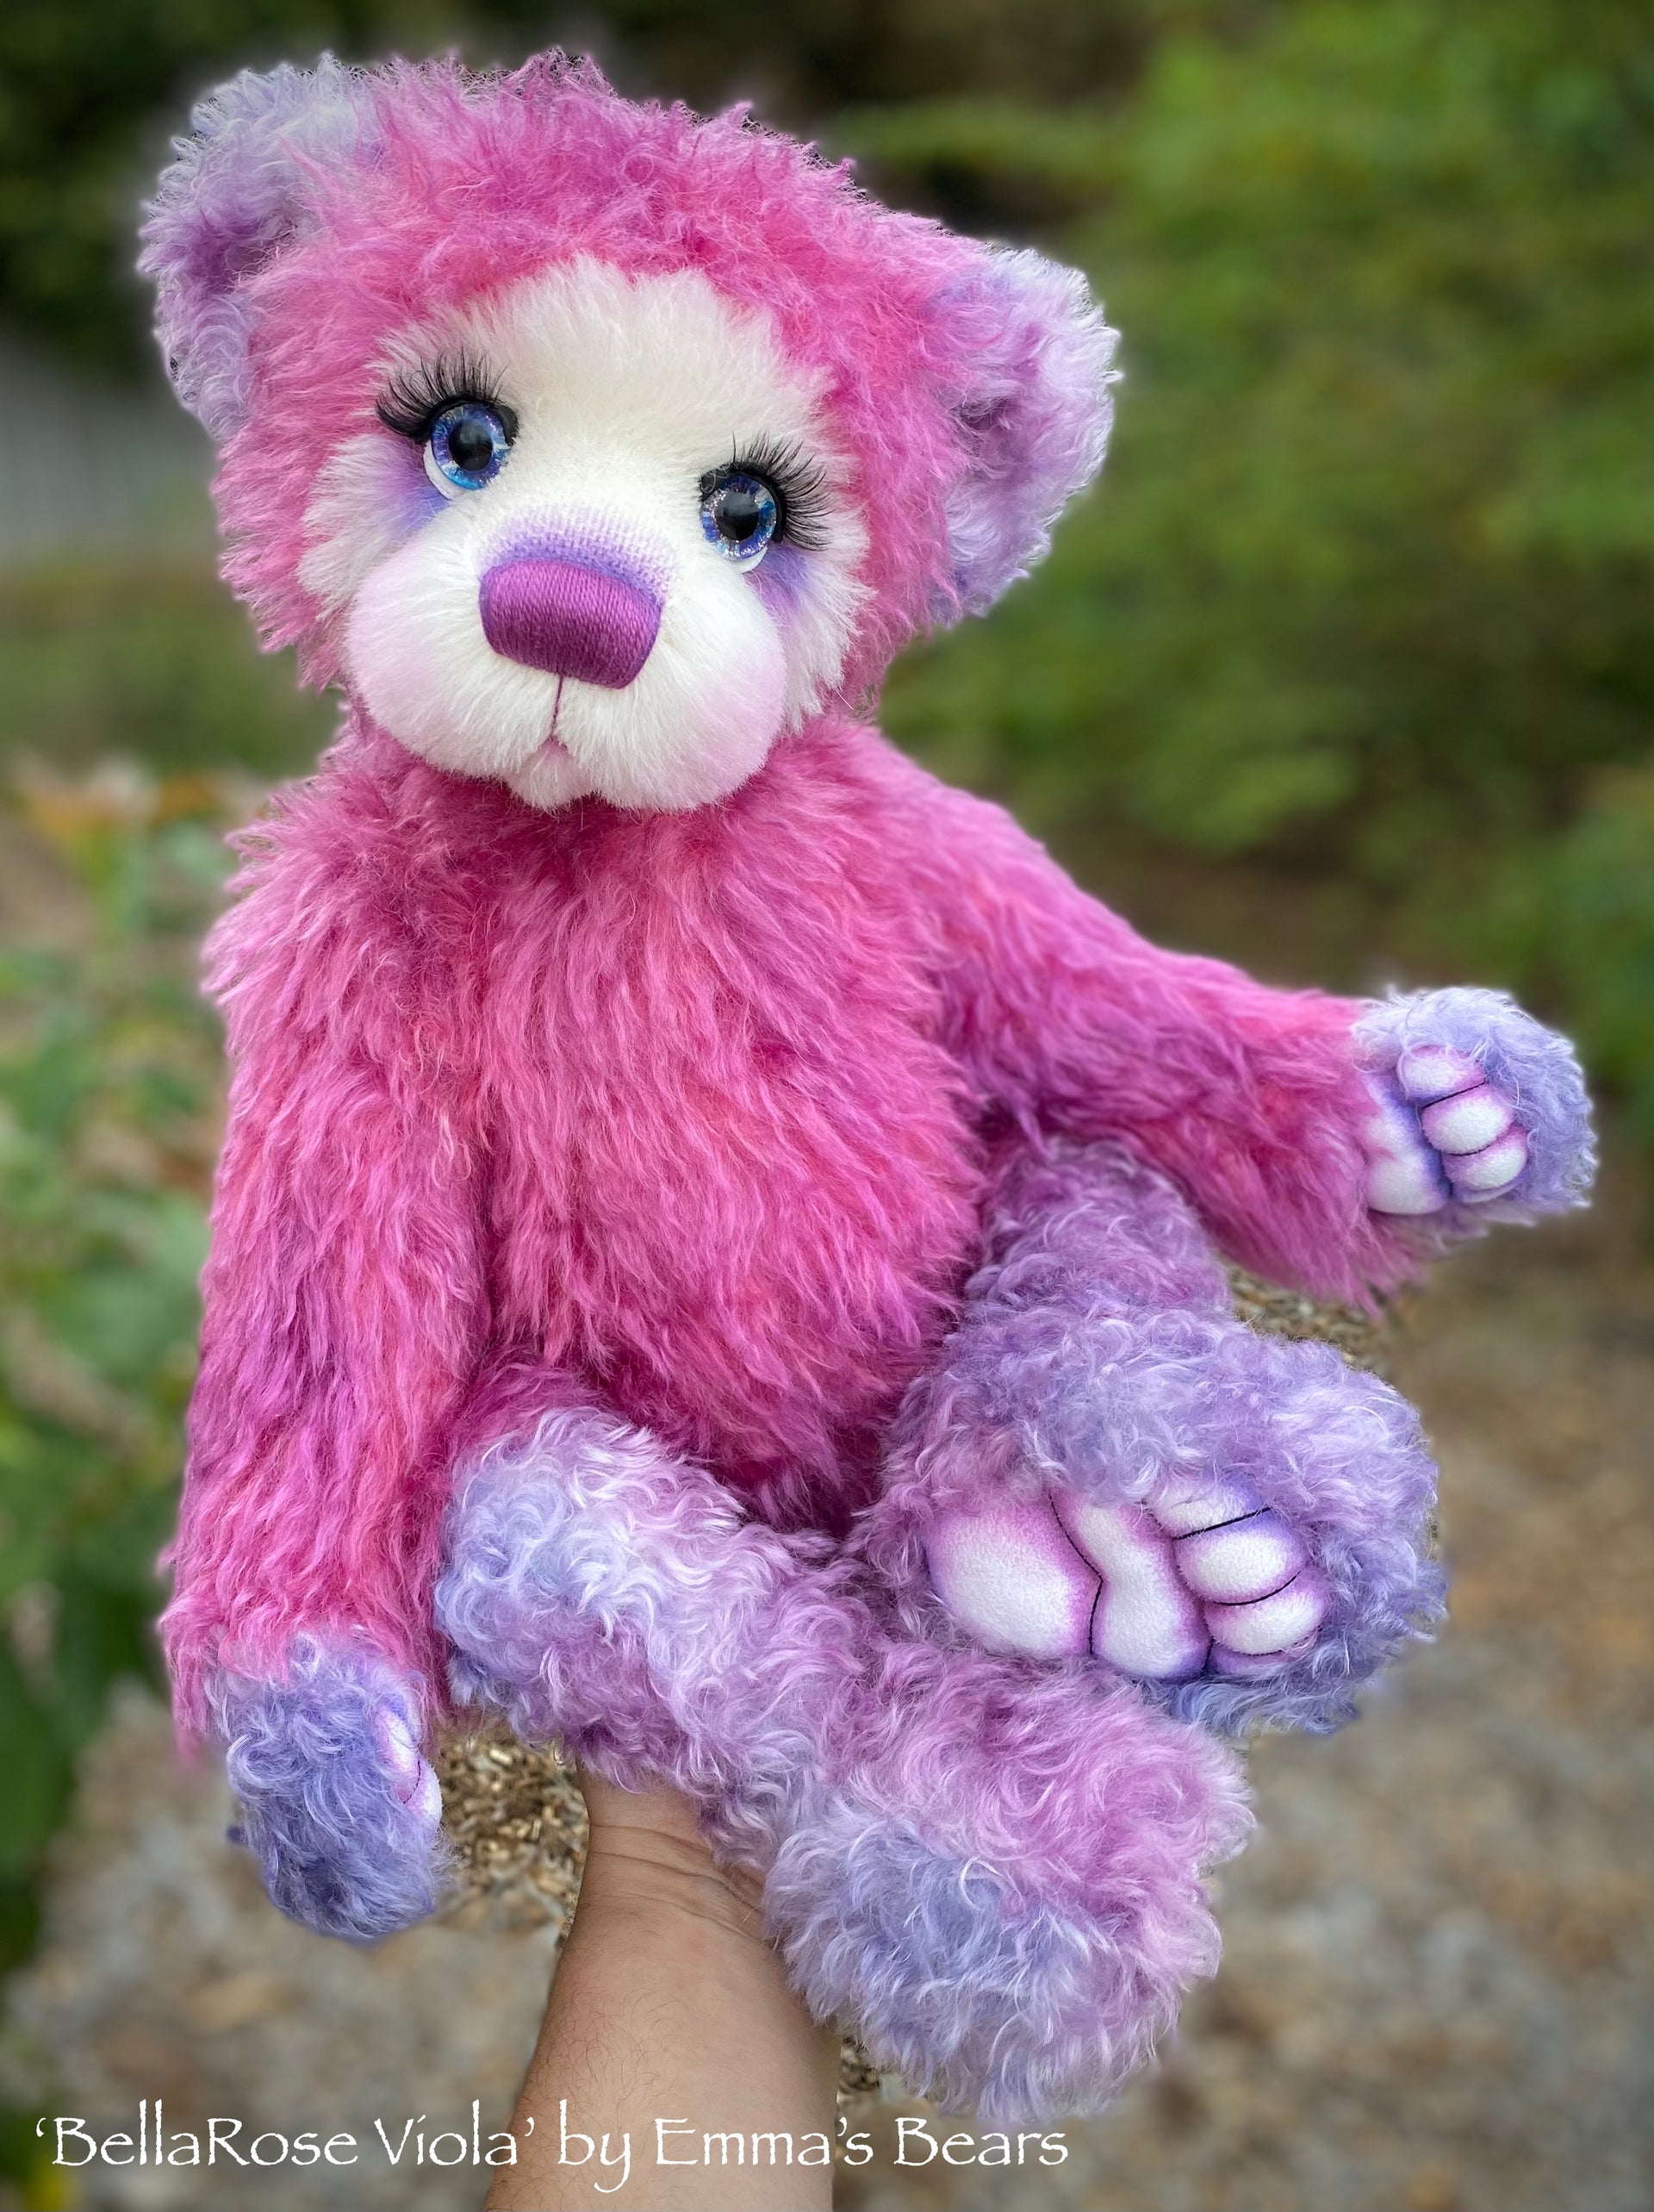 BellaRose Viola - 21" Mohair Toddler Artist Bear by Emma's Bears - OOAK